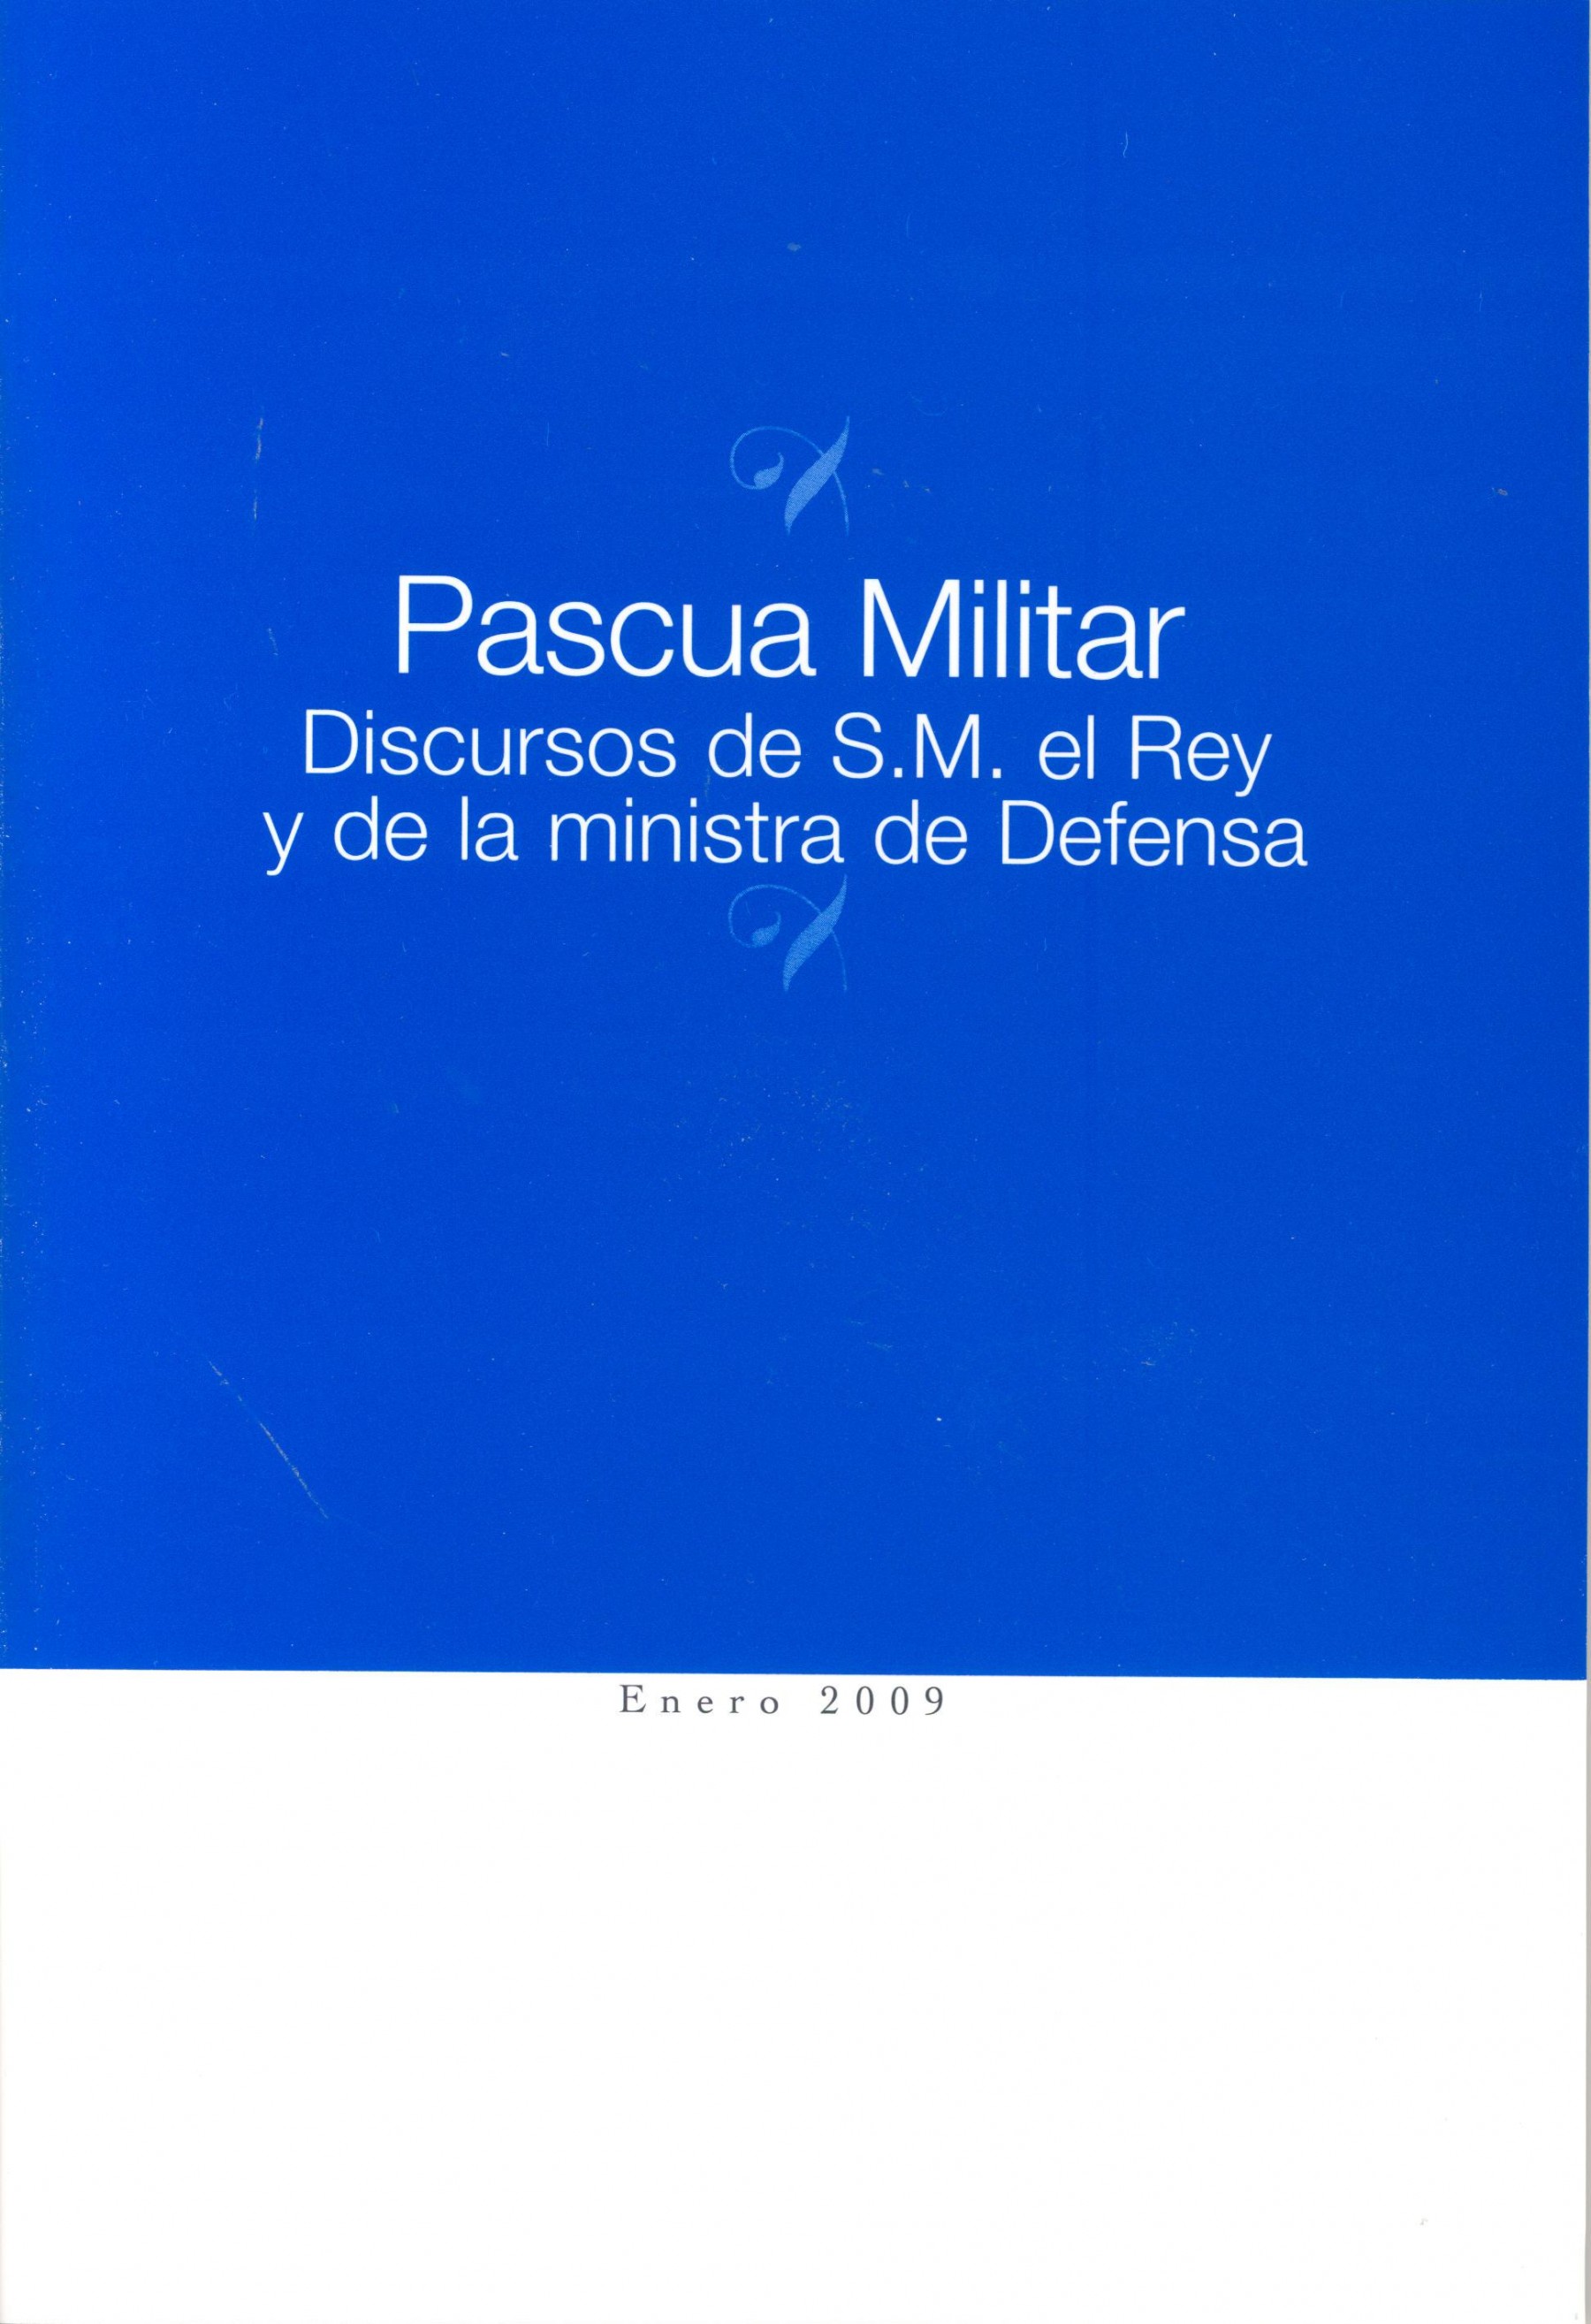 PASCUA MILITAR 2009